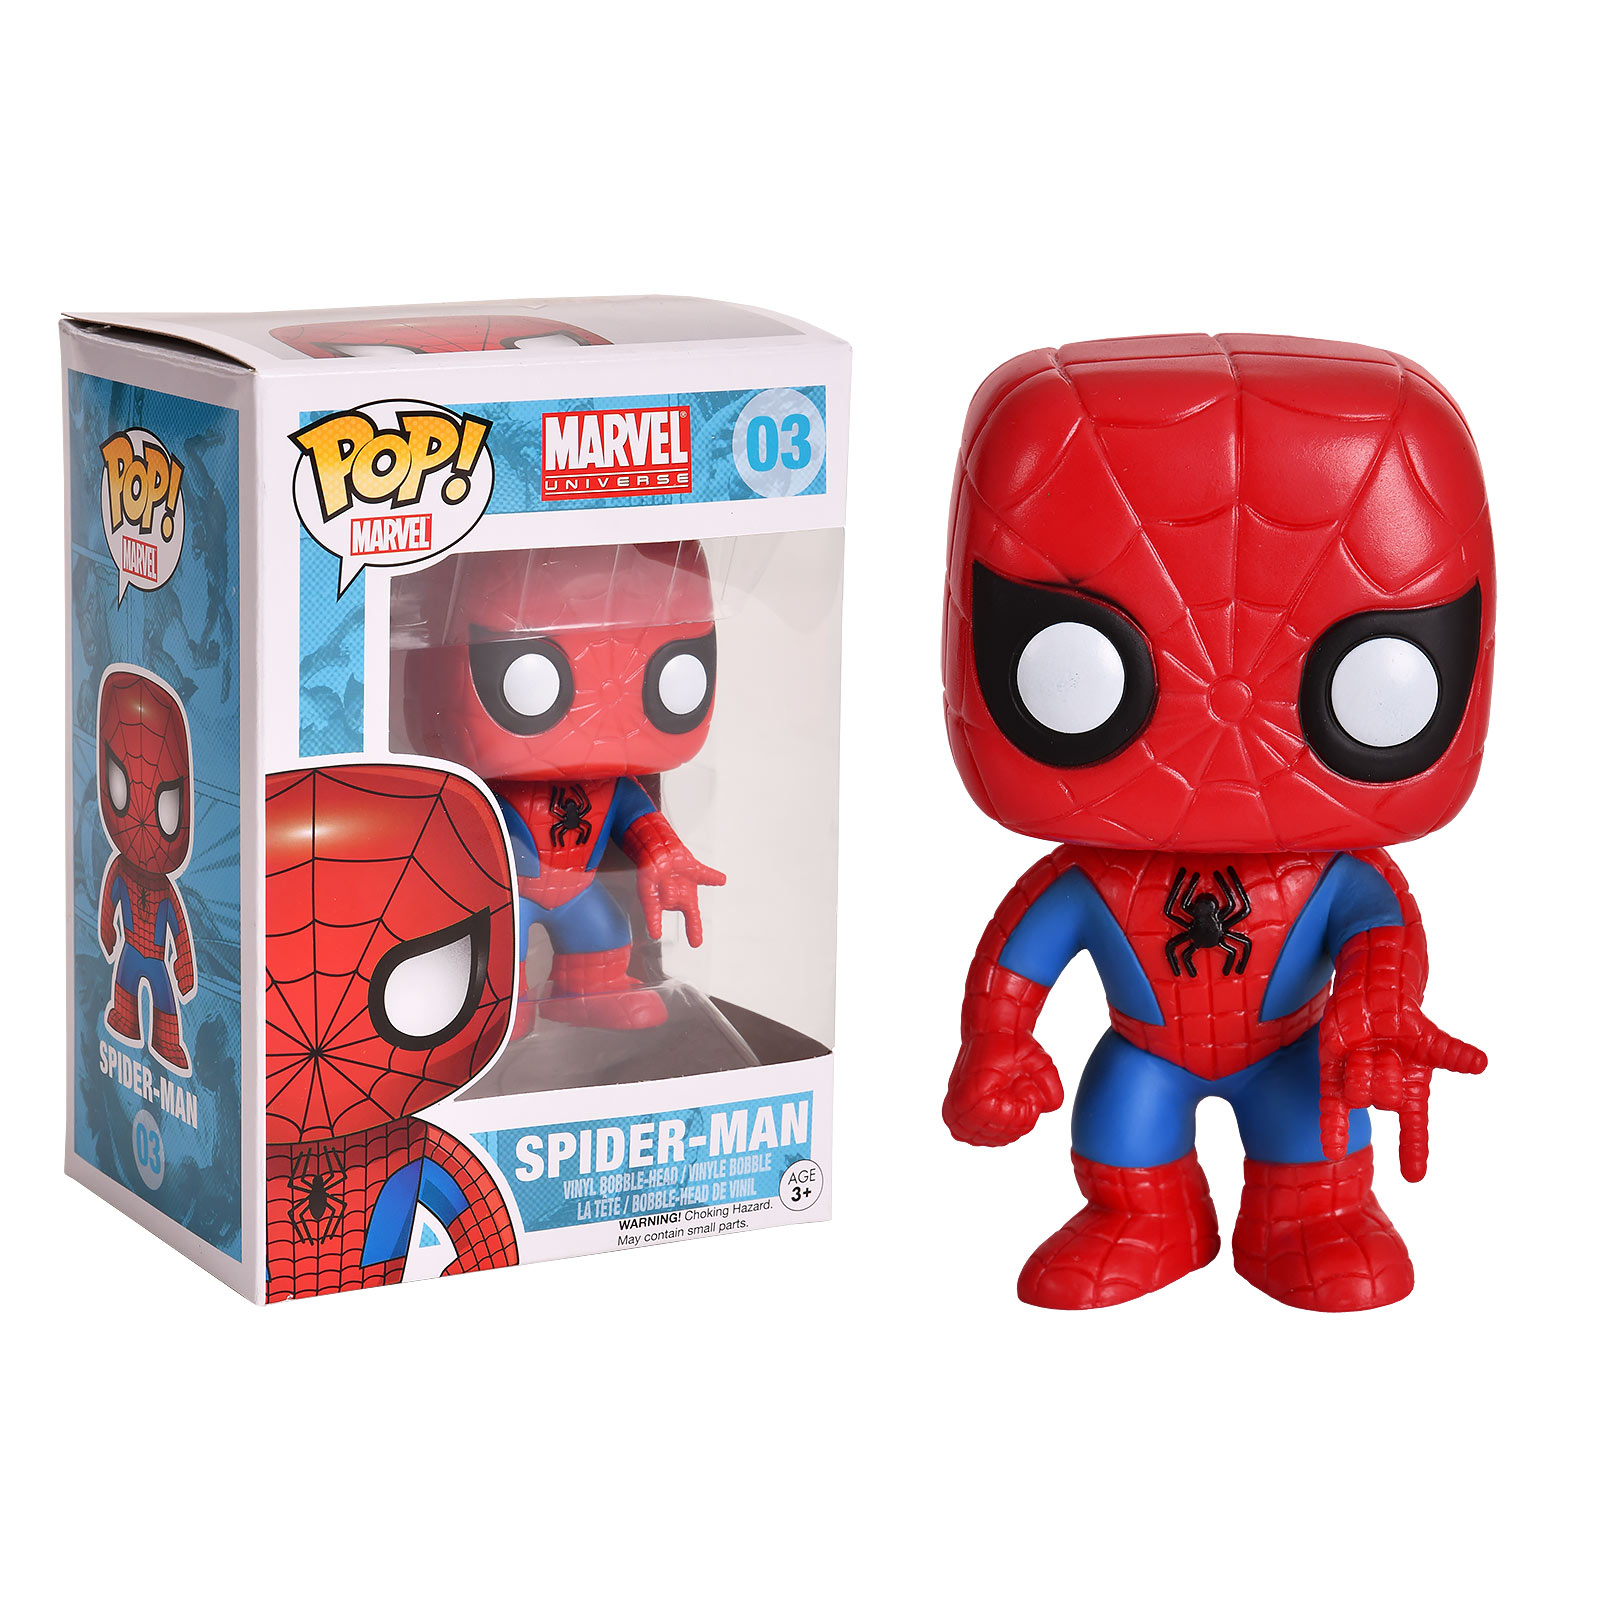 Spider-Man Marvel Bobblehead Figure